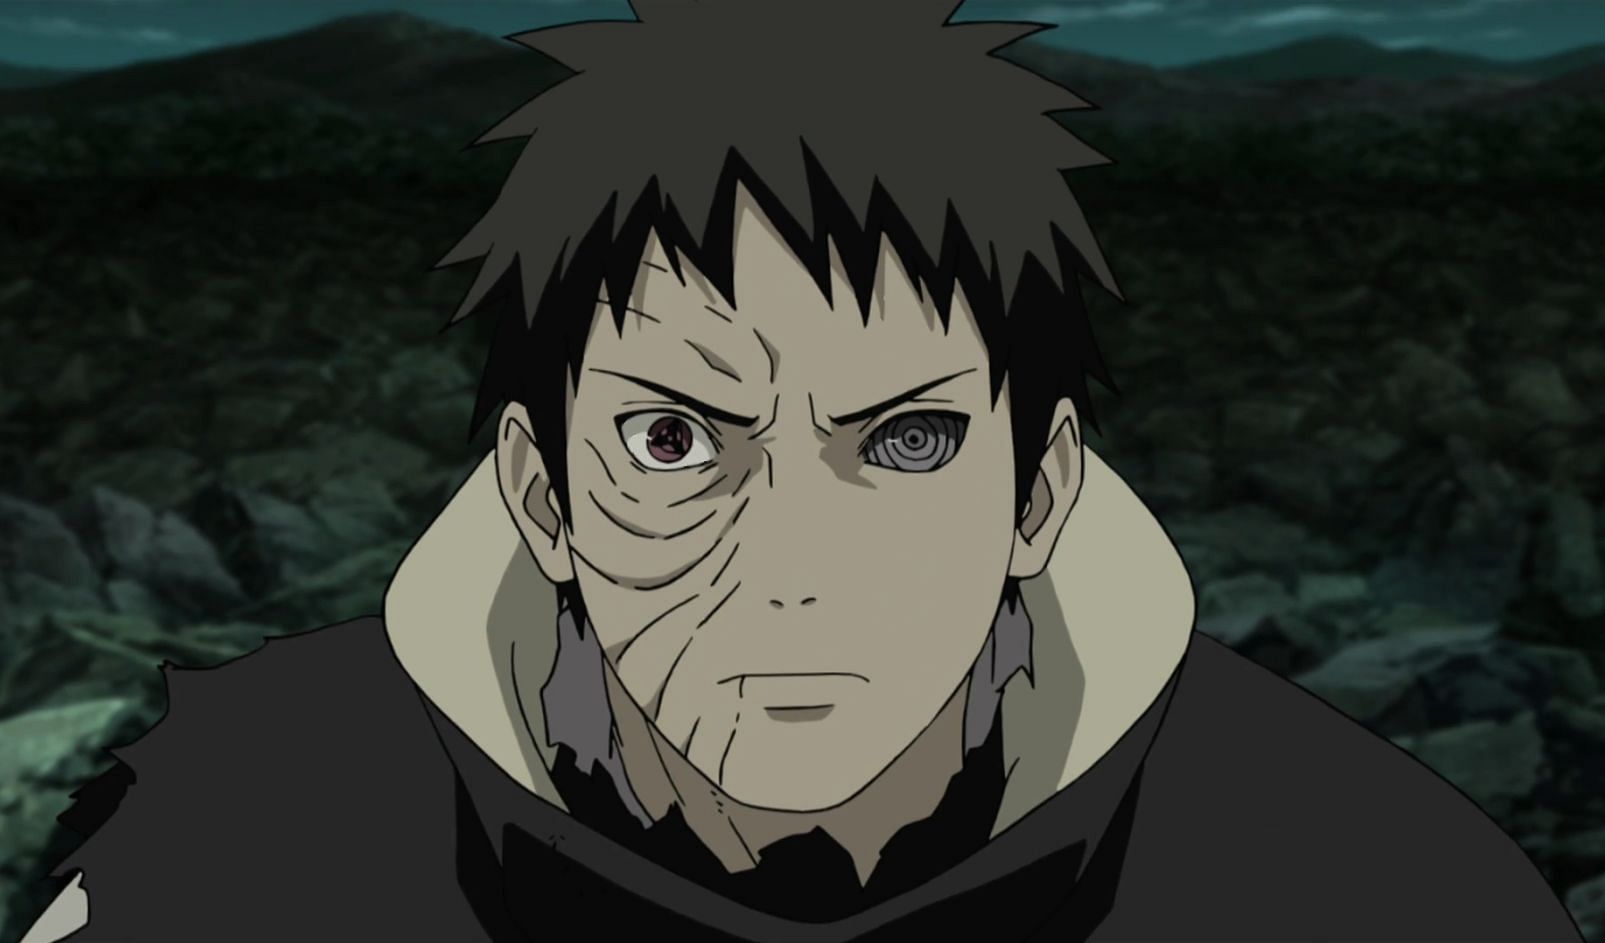 Obito Uchiha from the Naruto series (image via Pierrot)